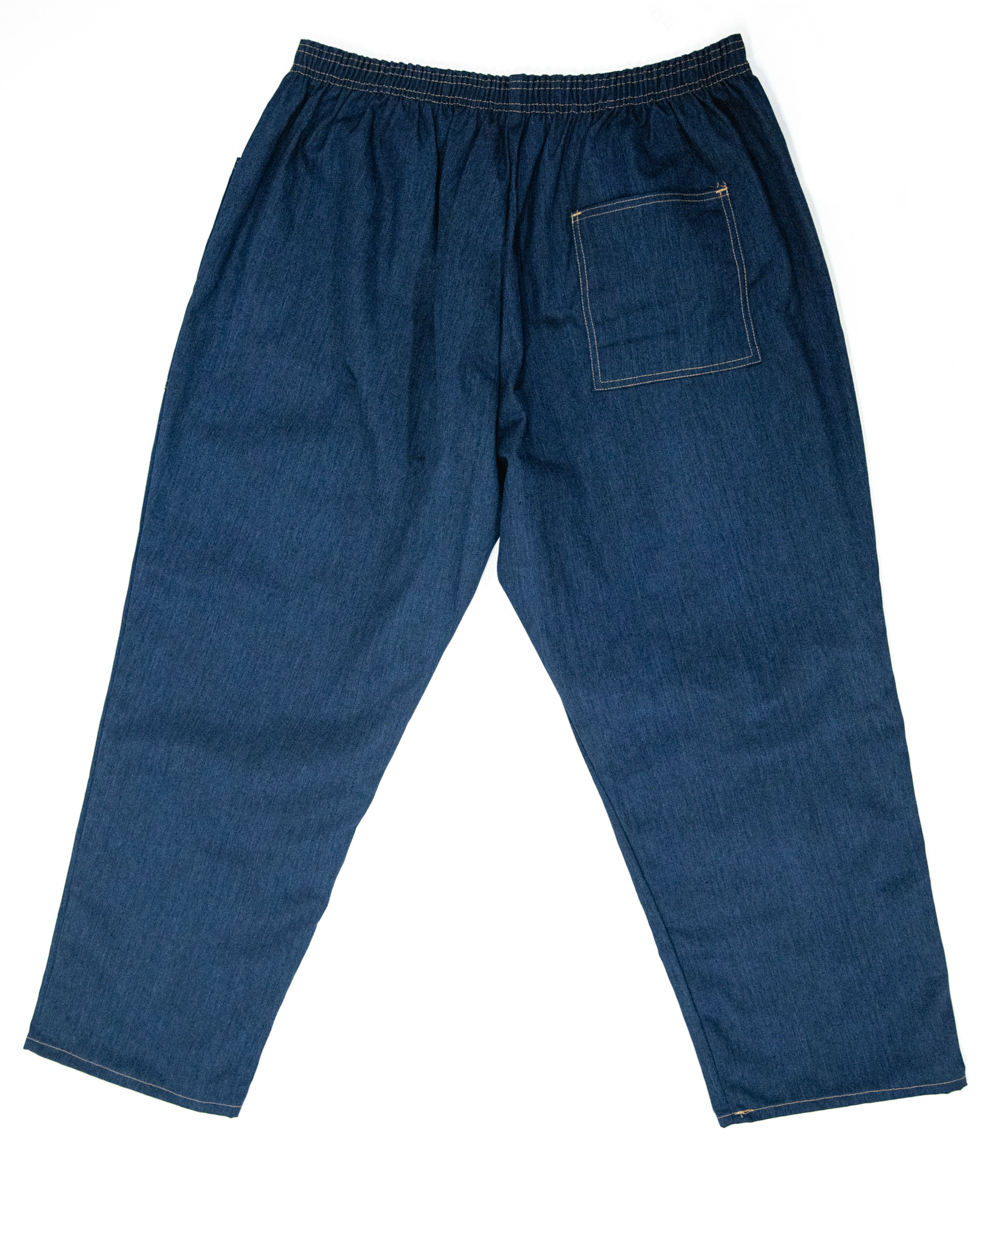 Women's Front Seam Pants - Pants - CALPIA Store